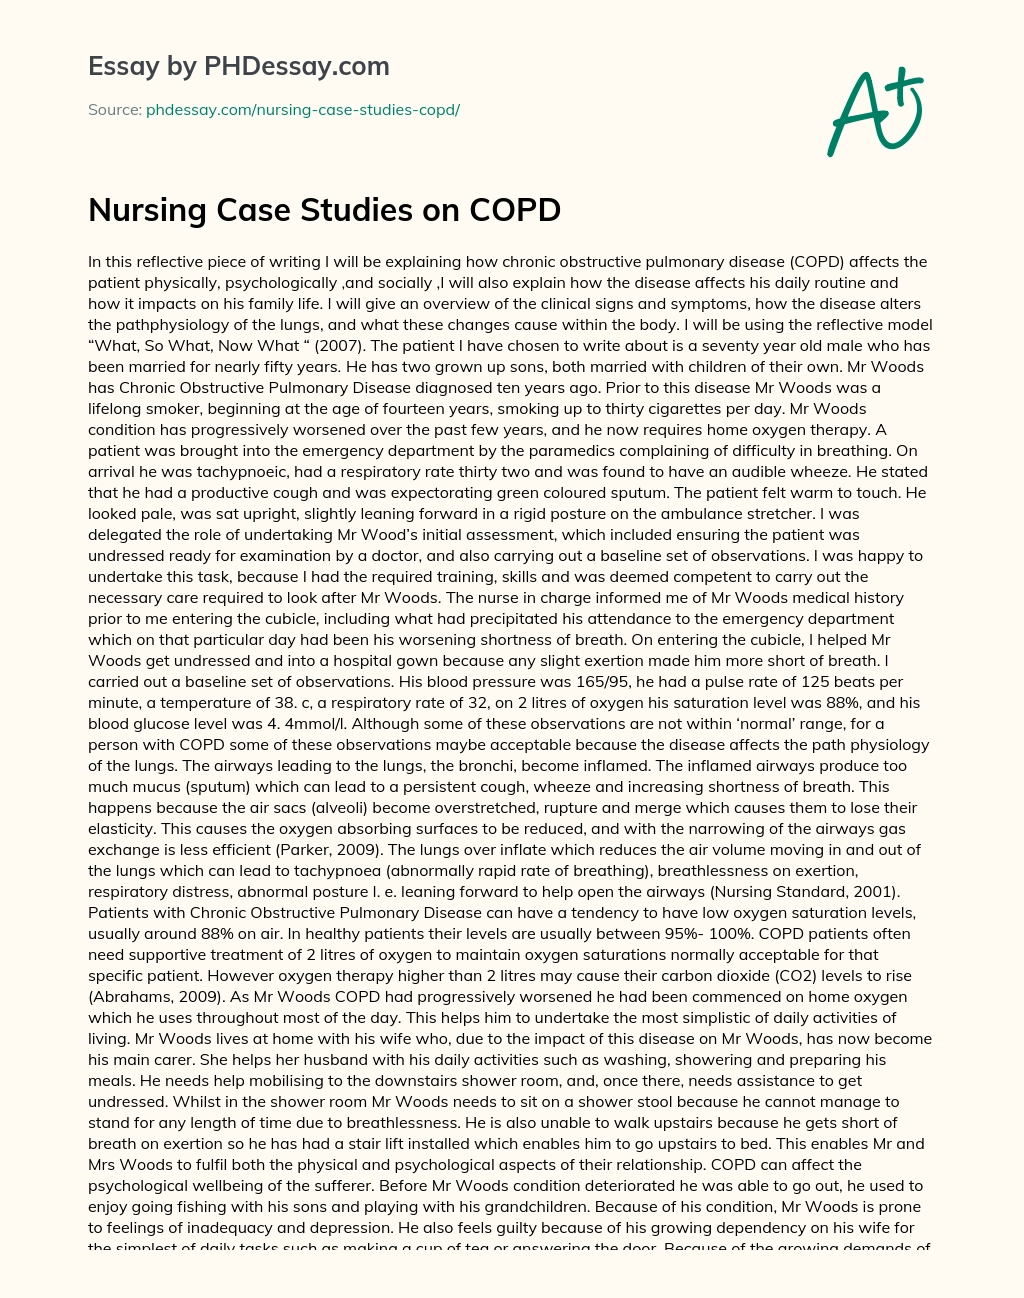 Nursing Case Studies on COPD essay